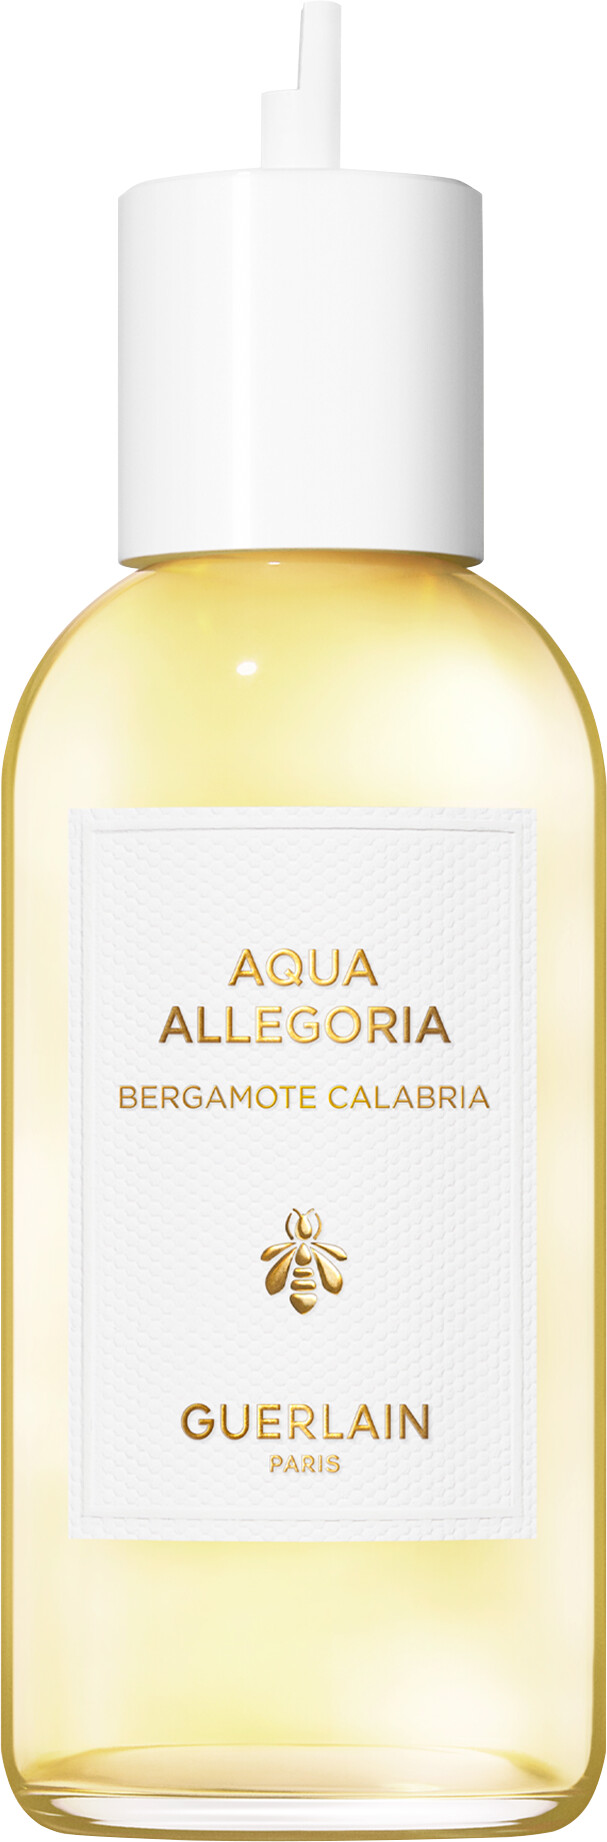 GUERLAIN Aqua Allegoria Bergamote Calabria Eau de Toilette Refill 200ml